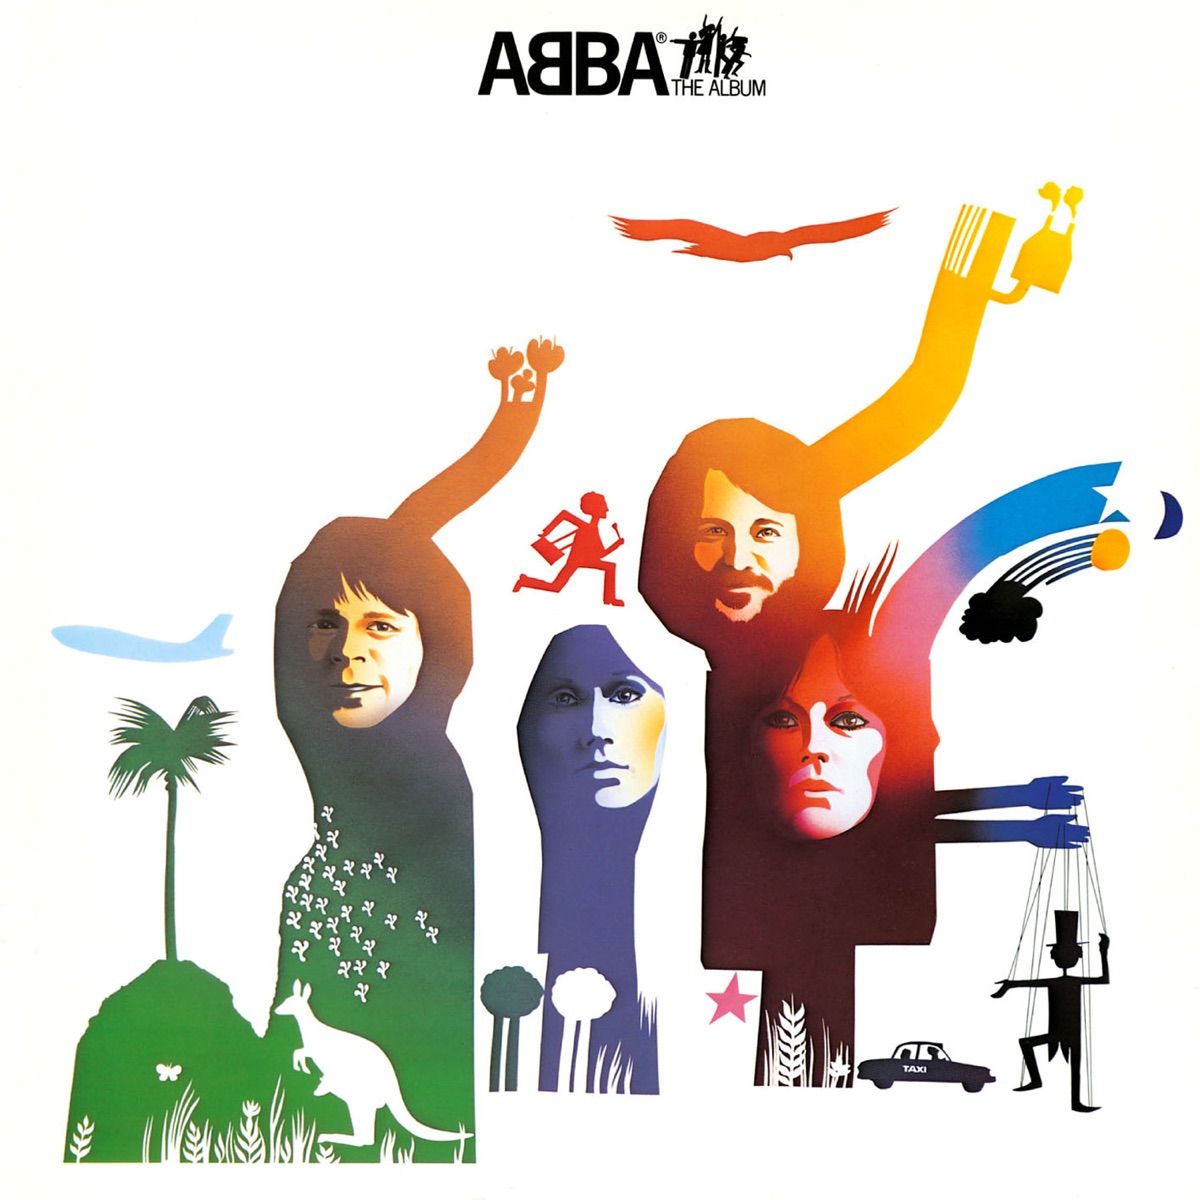 ABBA: The Album - Album by ABBA - Apple Music